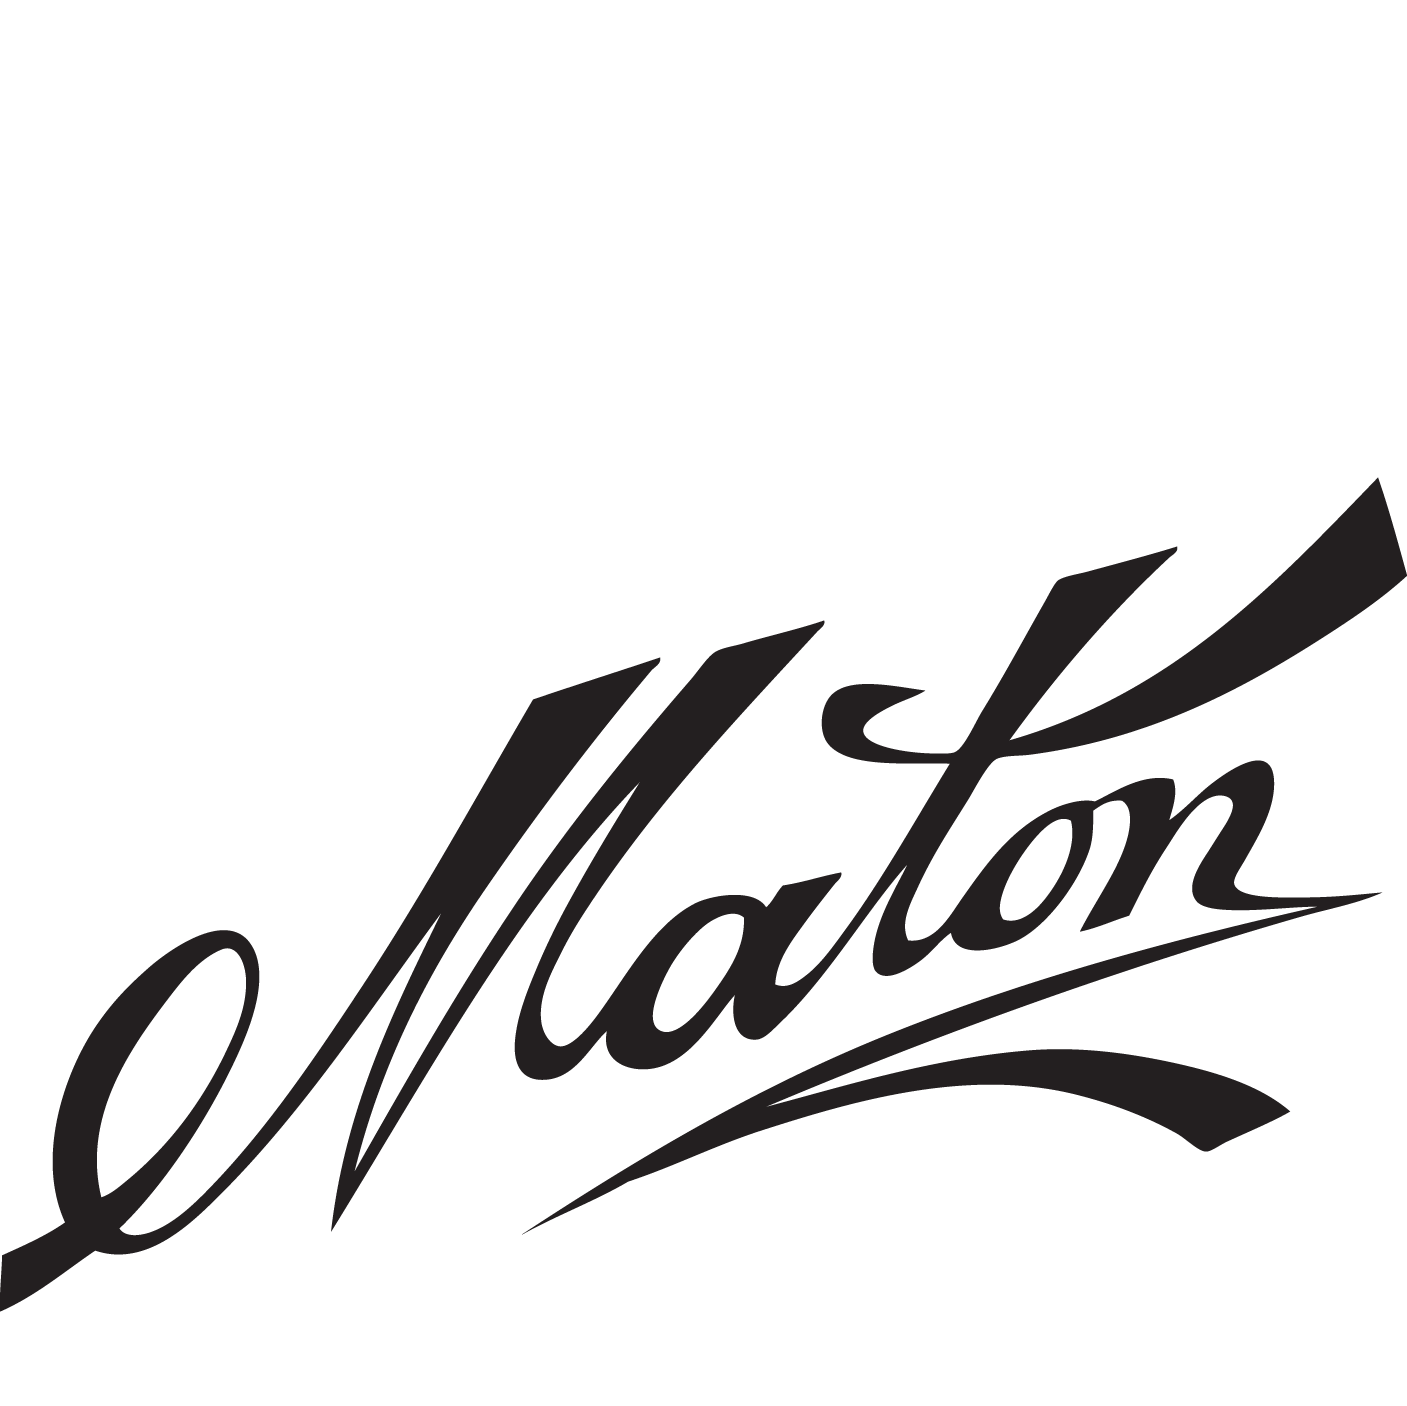 Matons logo1 edited